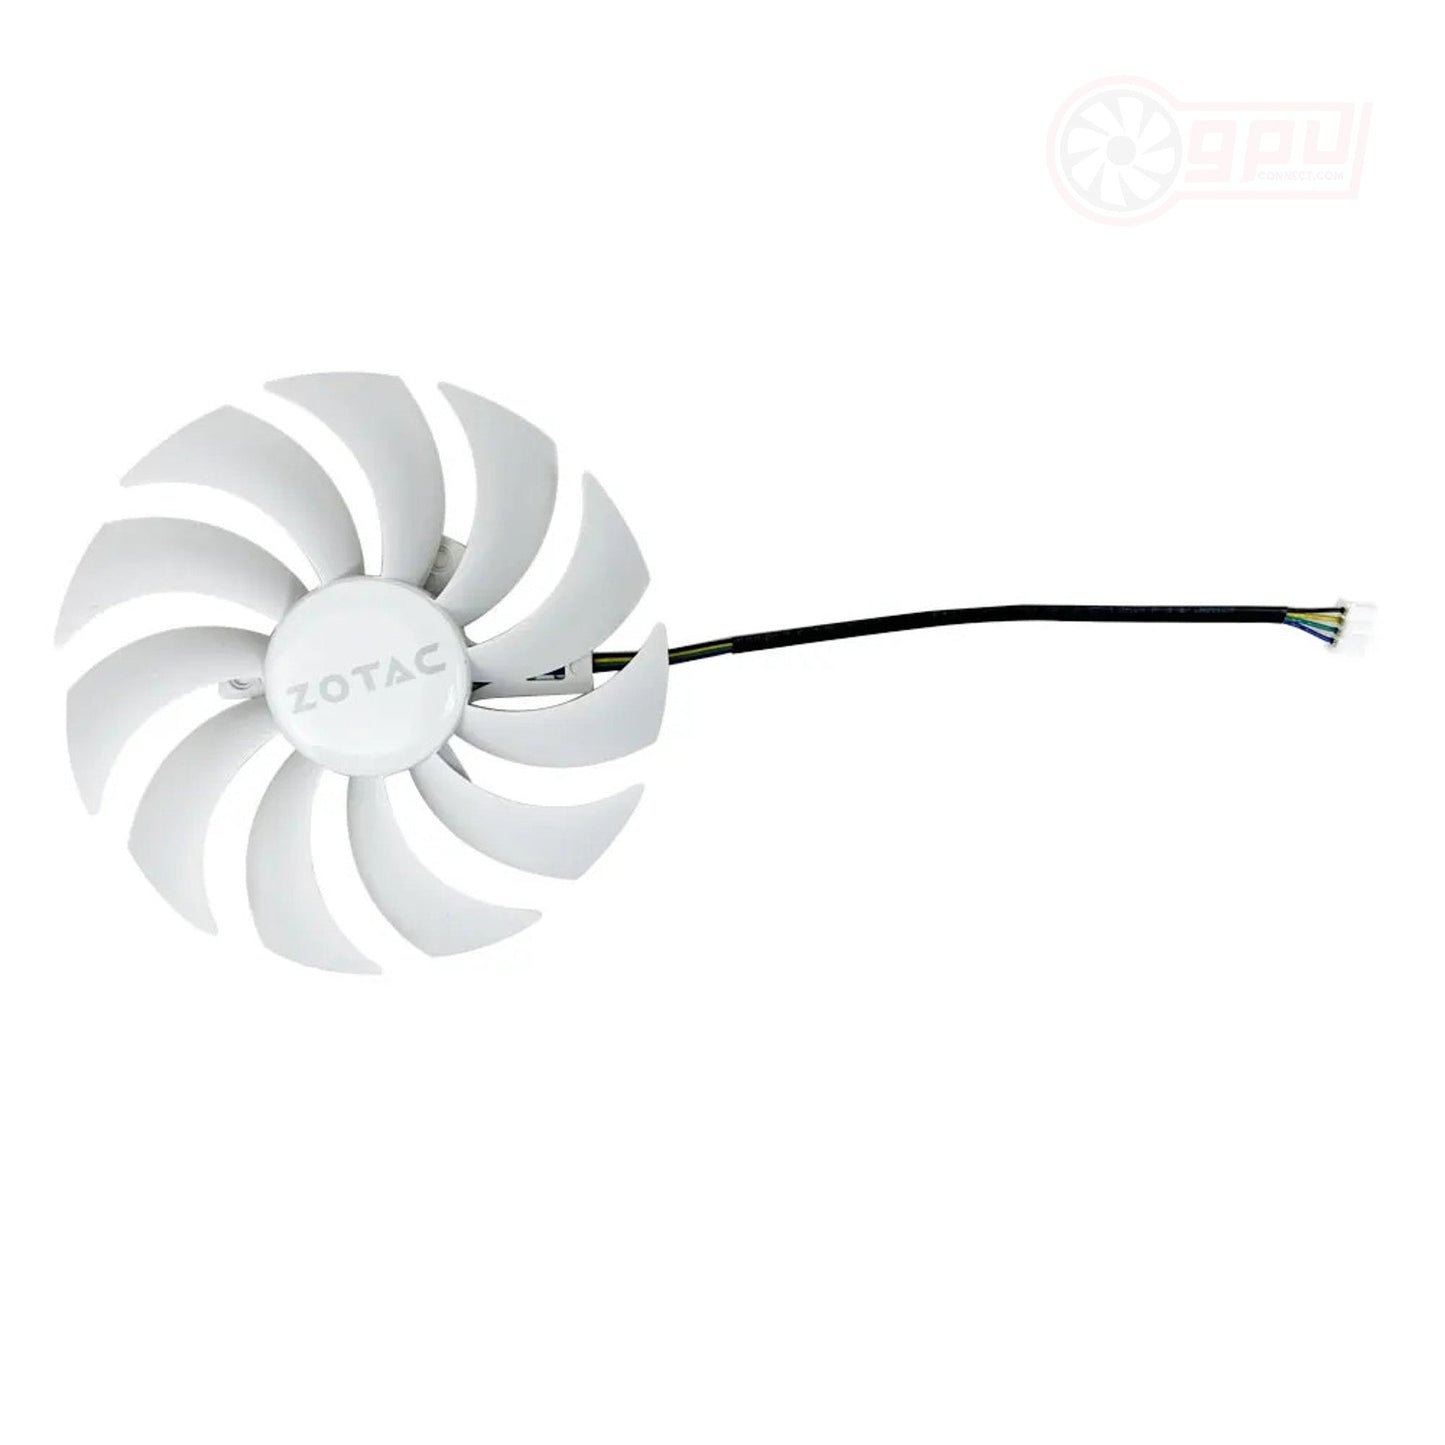 ZOTAC RTX 3060 AMP White Edition Replacement GPU Fans - GPUCONNECT.COM